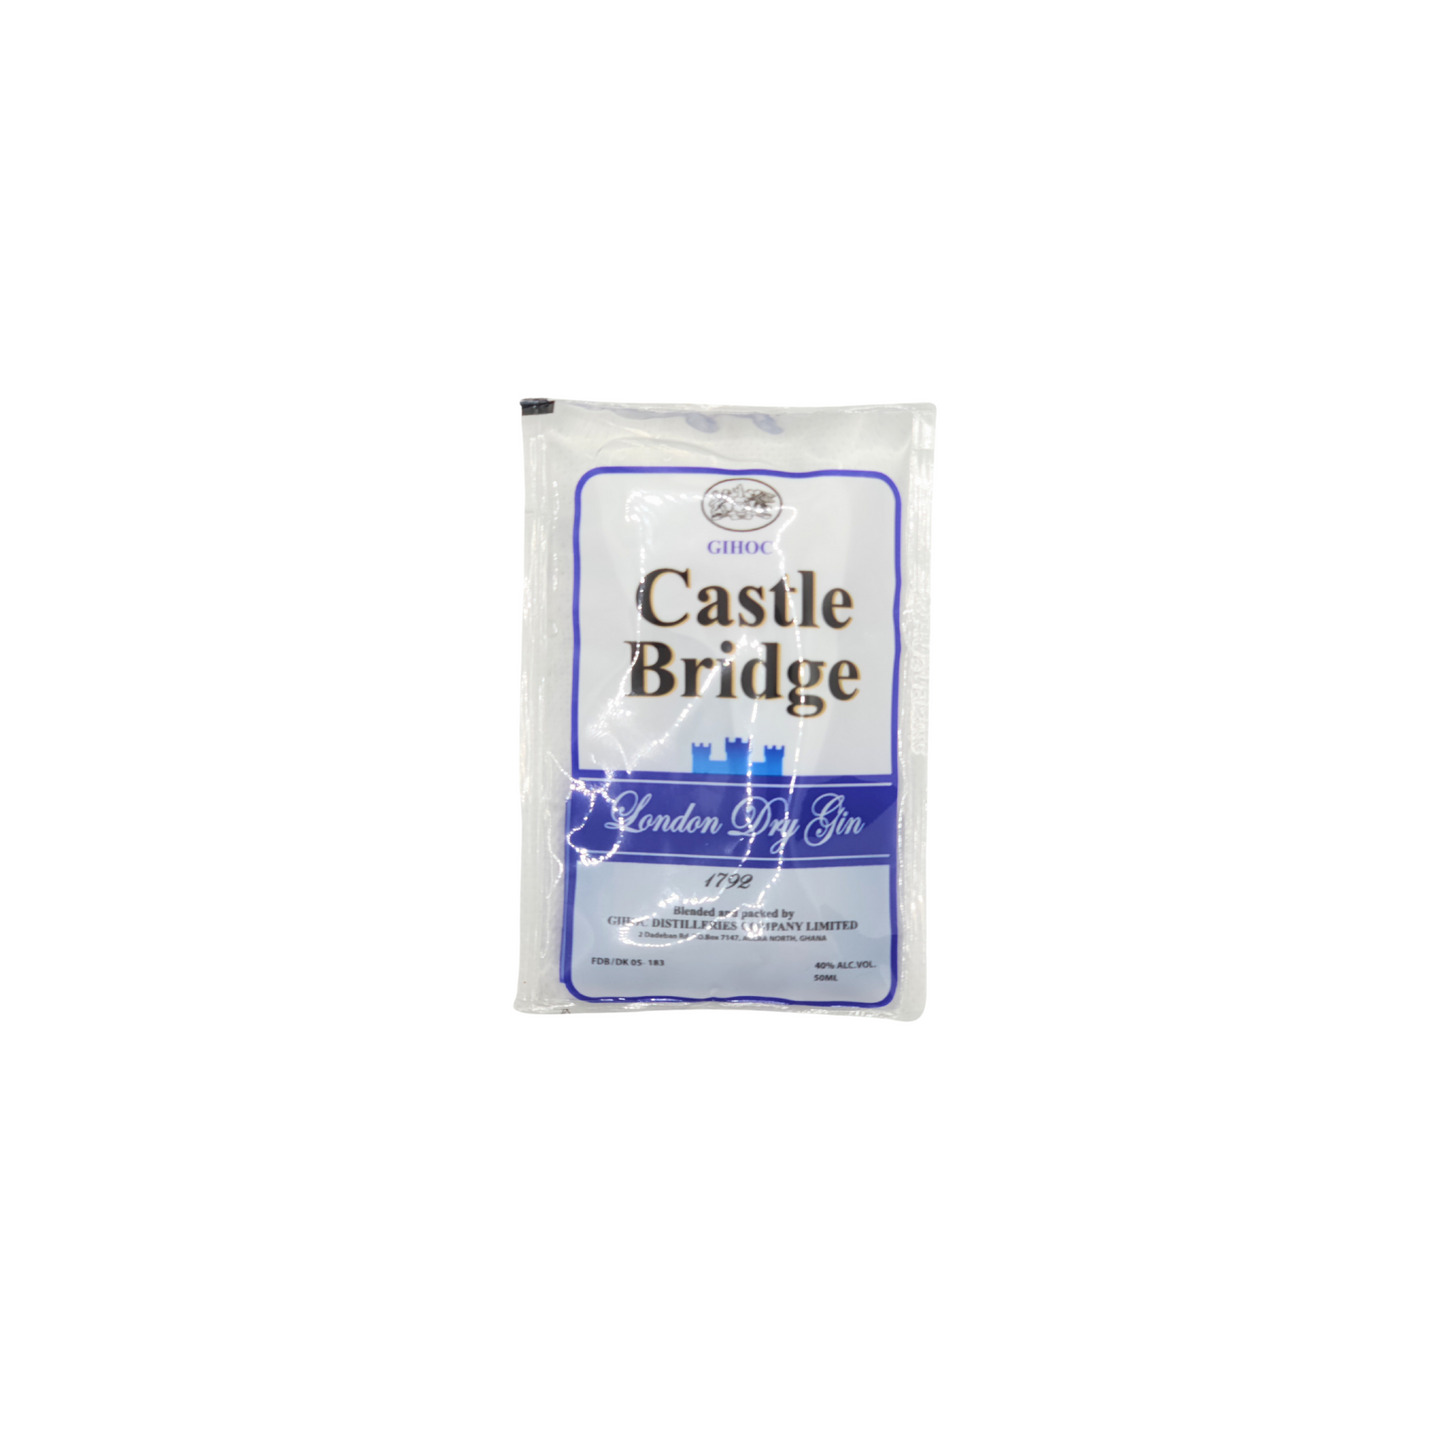 50 millilitre pack of castle bridge london dry gin